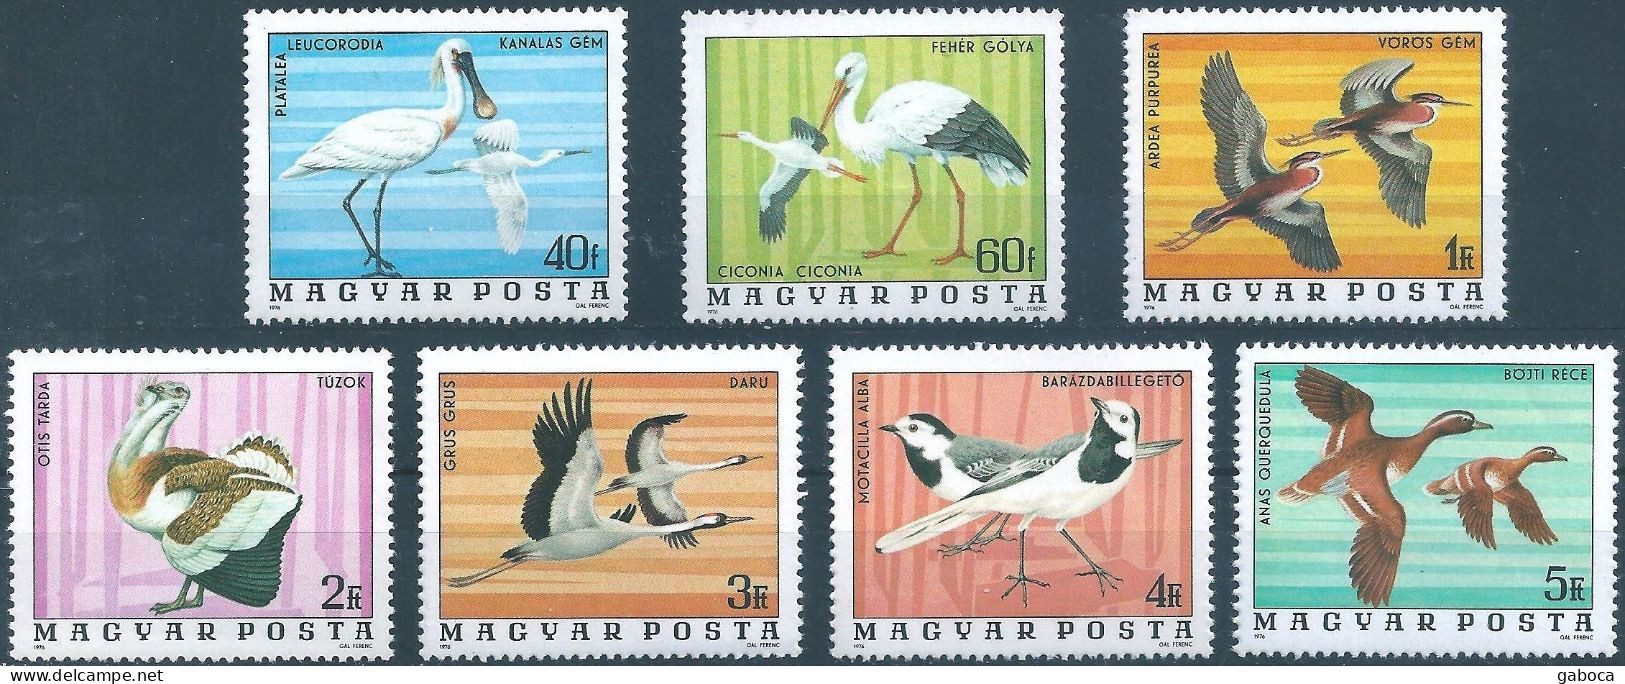 C5211 Hungary Animal Bird Long-Legged Wading Bustard Full Set MNH - Swallows